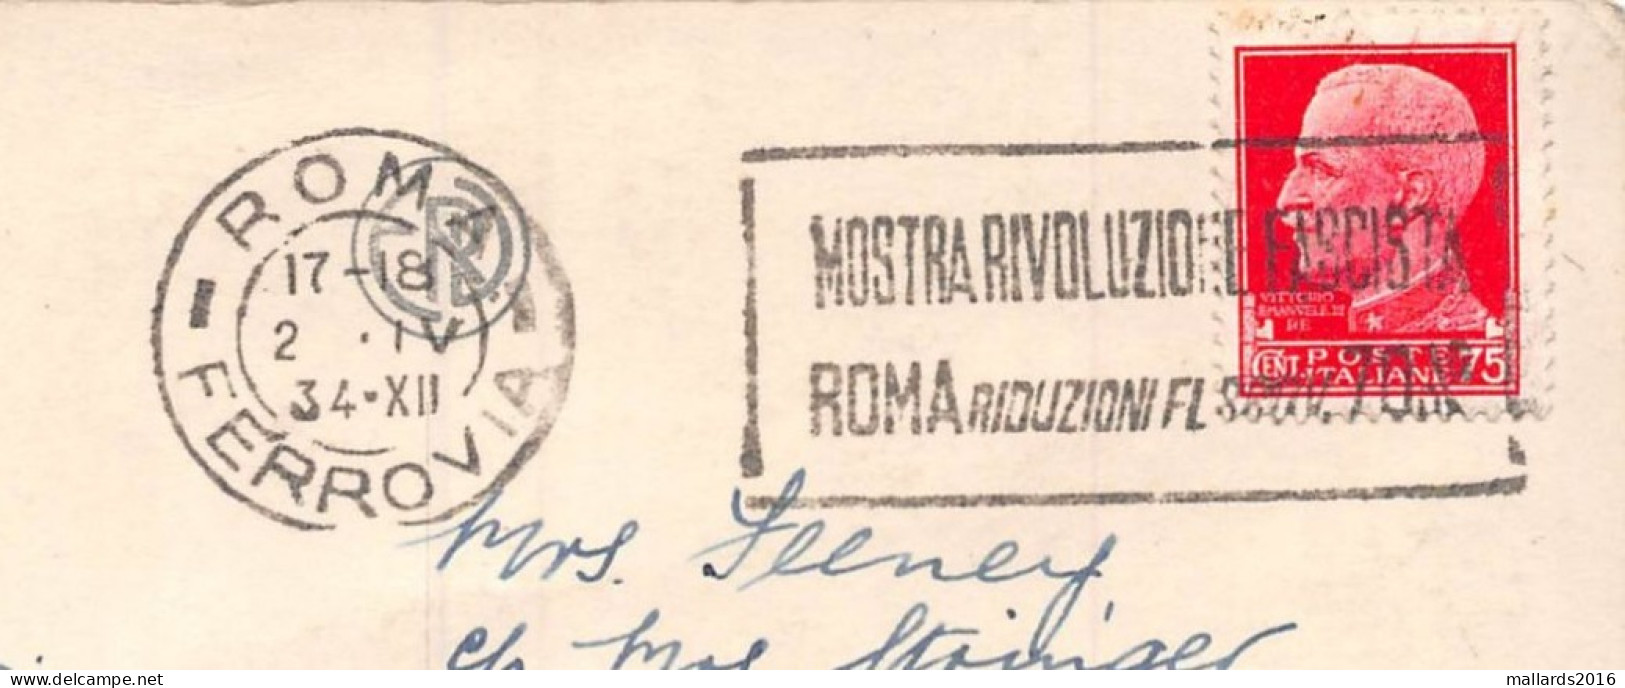 MOSTRA RIVOLUZIOEE FASCISTA, ROMA - FERROVIA 1934 (FACIST REVOLUTIONARY EXHIBITION) - SLOGAN POSTMARK #240221 - Publicité